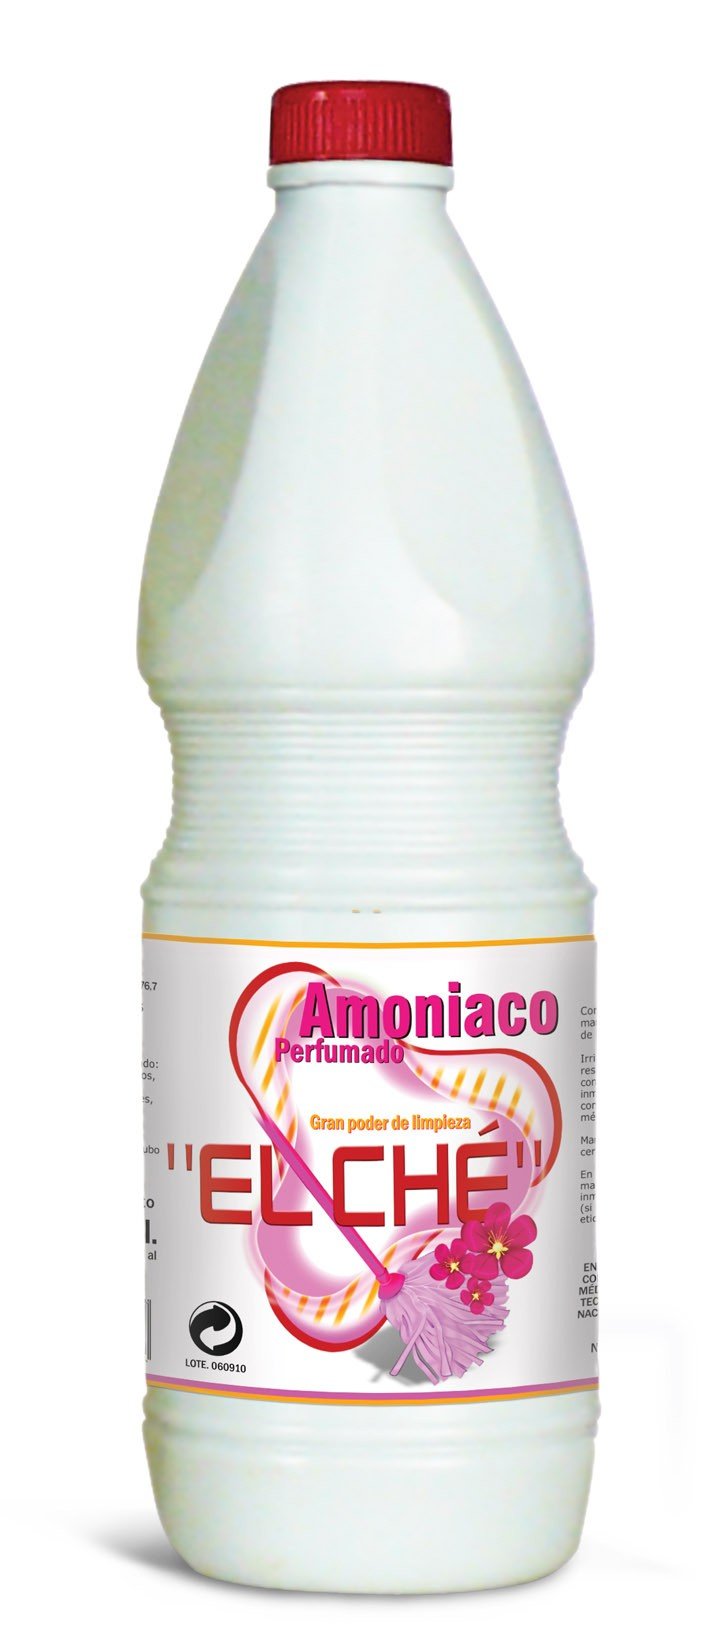 Amoniaco Perfumado Tequima — Lejias Pons